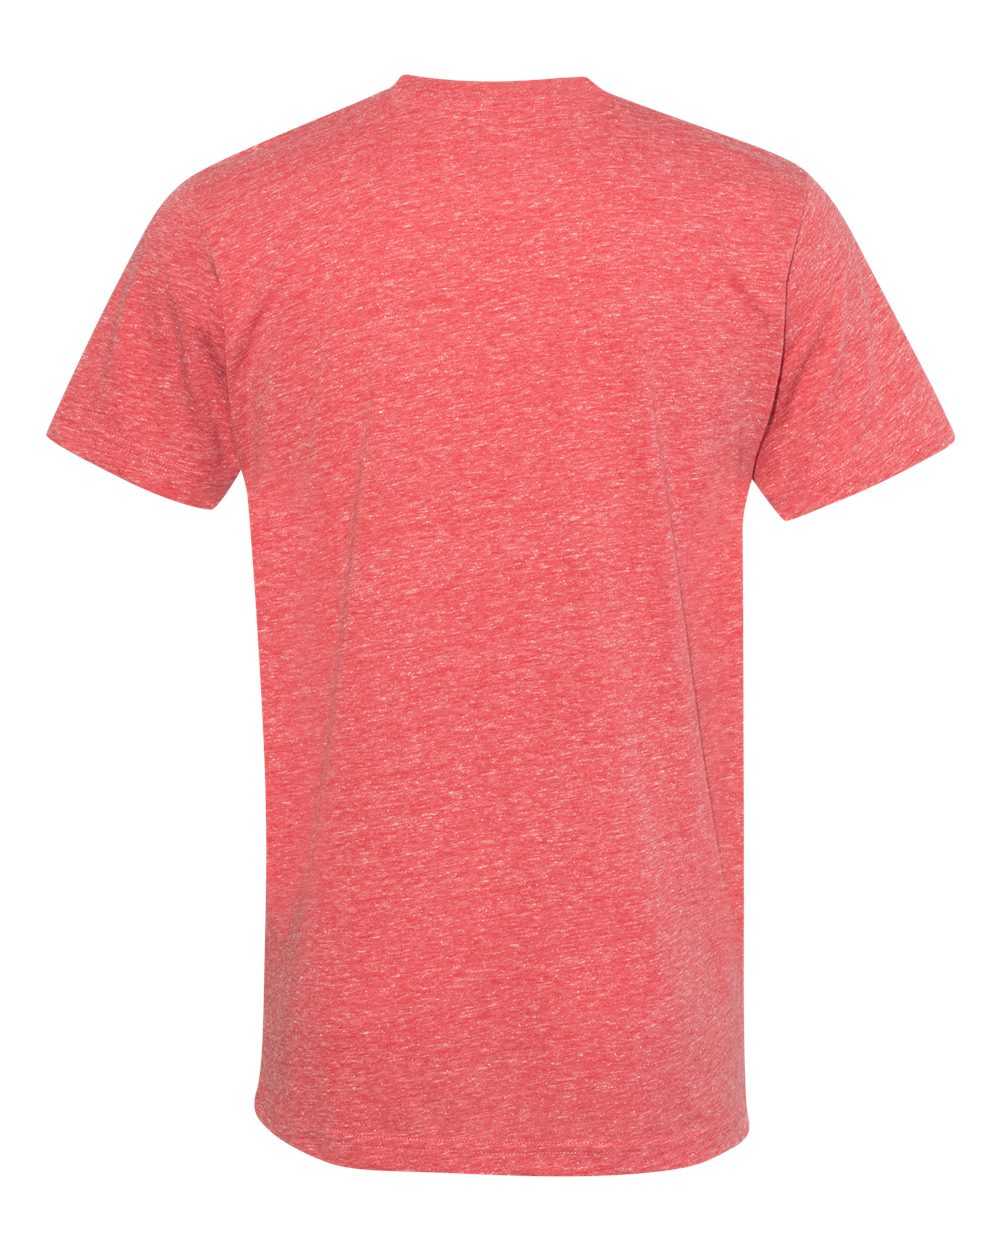 Lat 6991 Harborside Melange T-Shirt - Red Melange - HIT a Double - 3